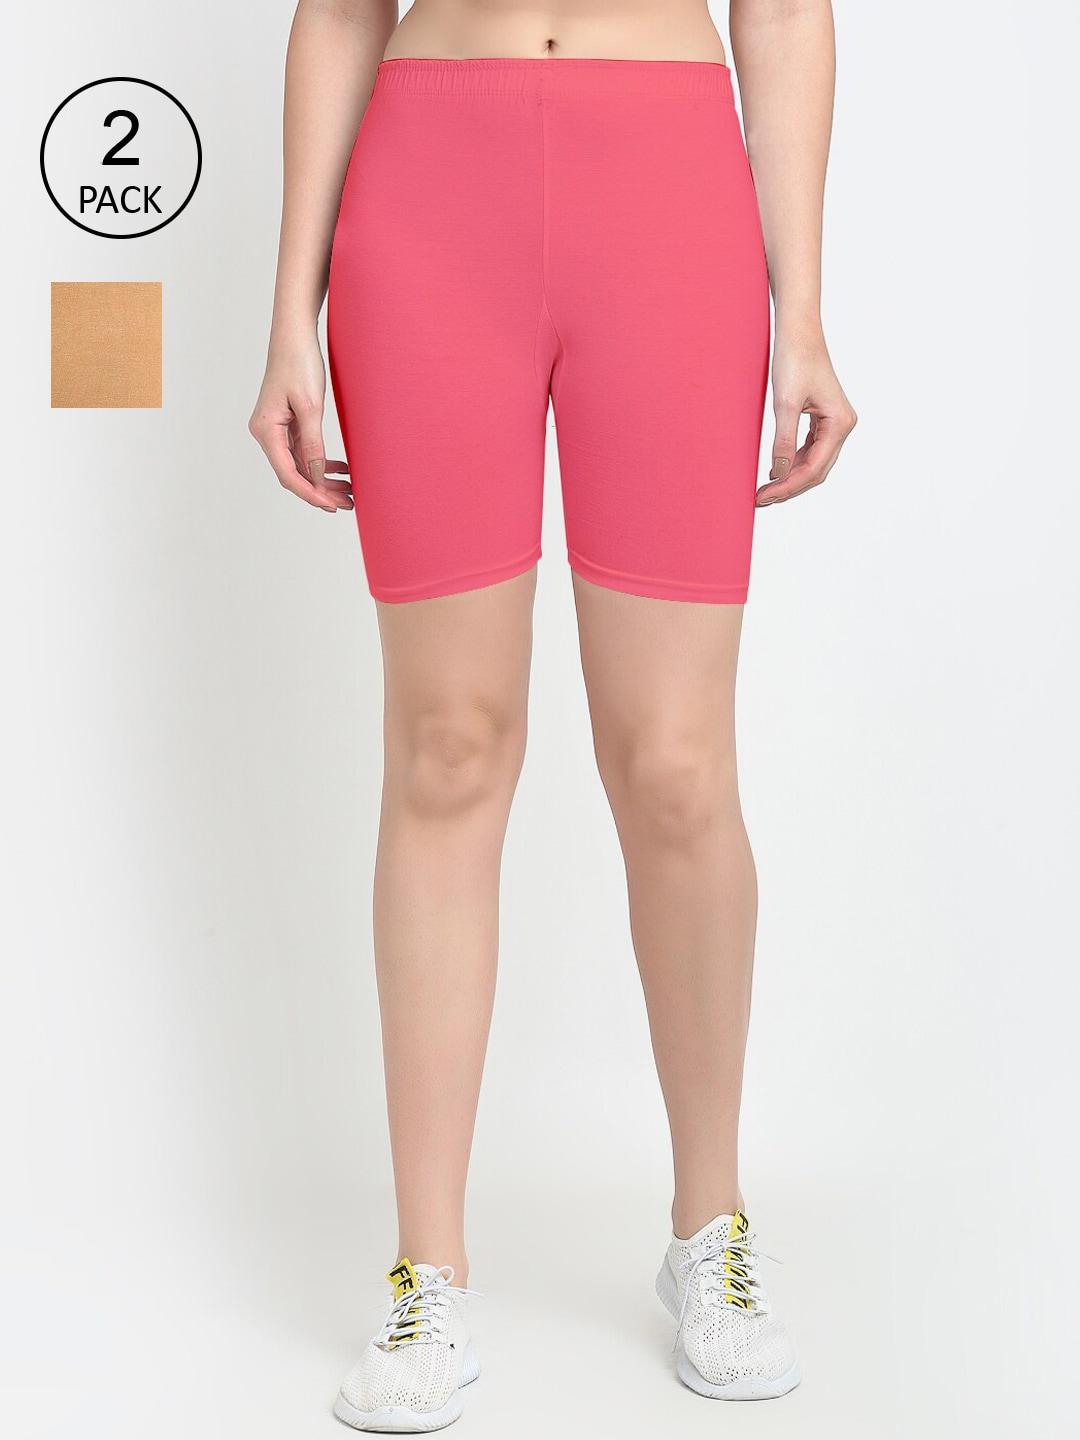 gracit women set of 2 beige & pink biker shorts